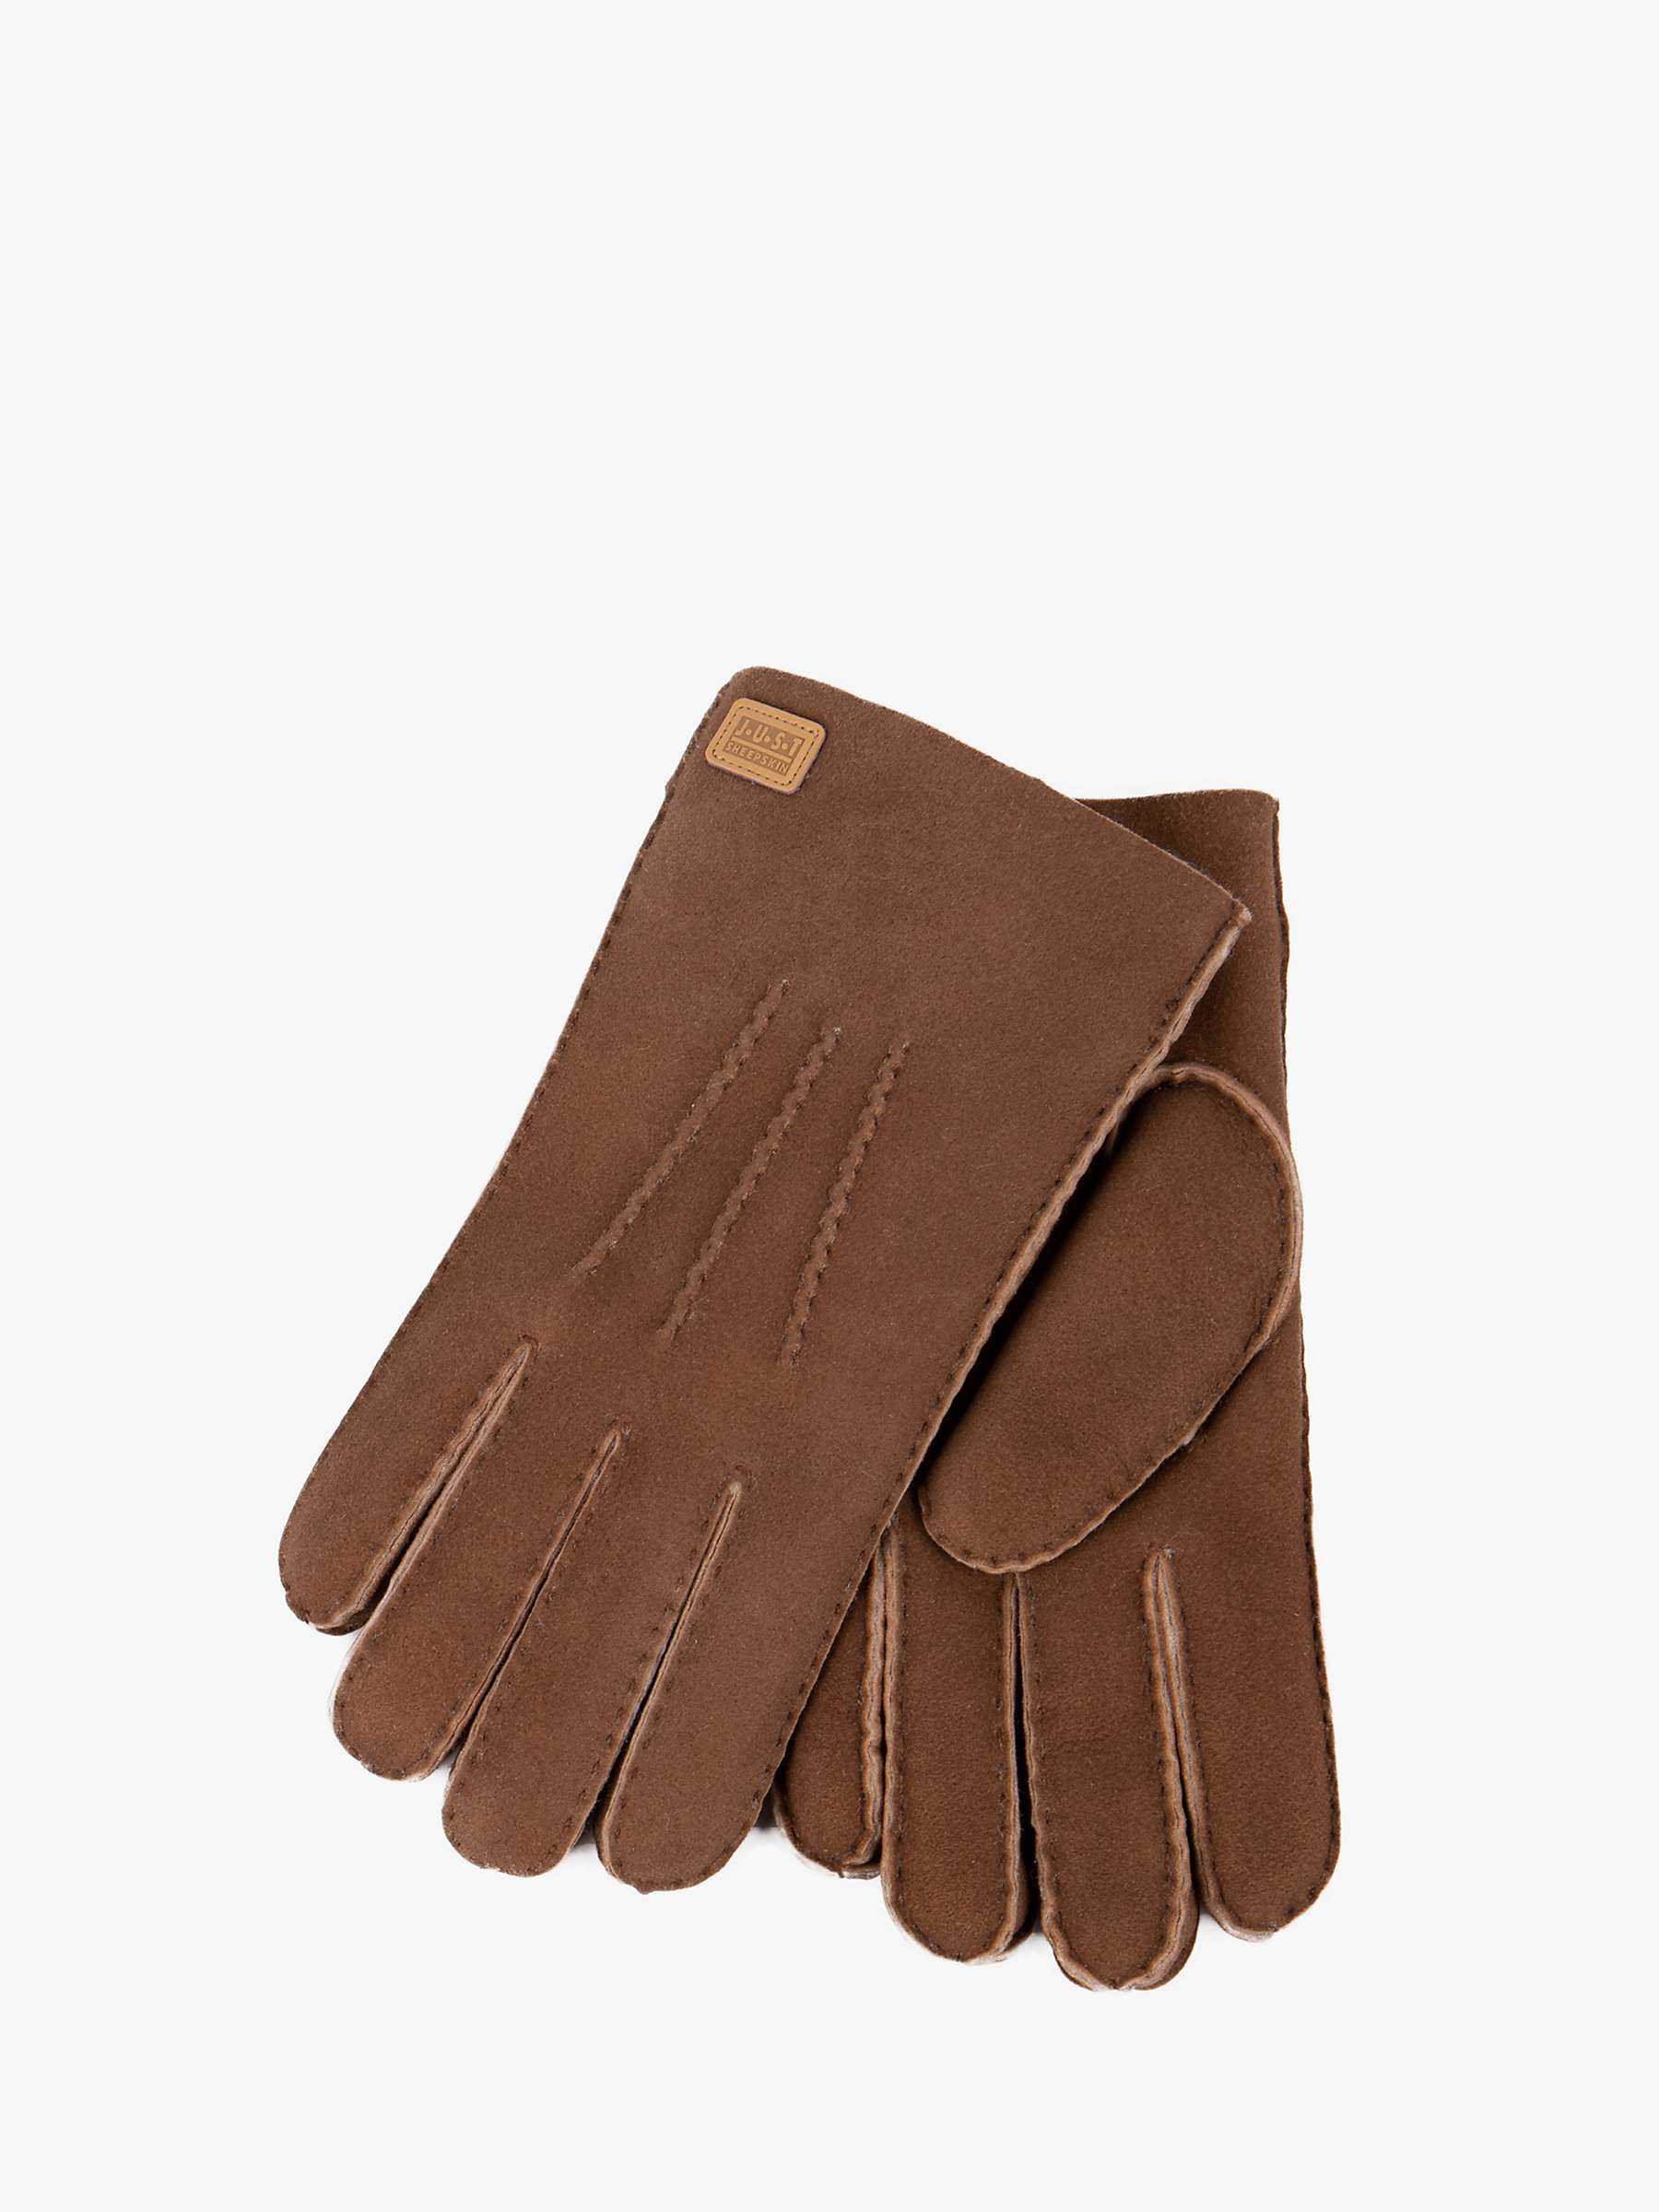 Buy Just Sheepskin Rowan Gloves Online at johnlewis.com